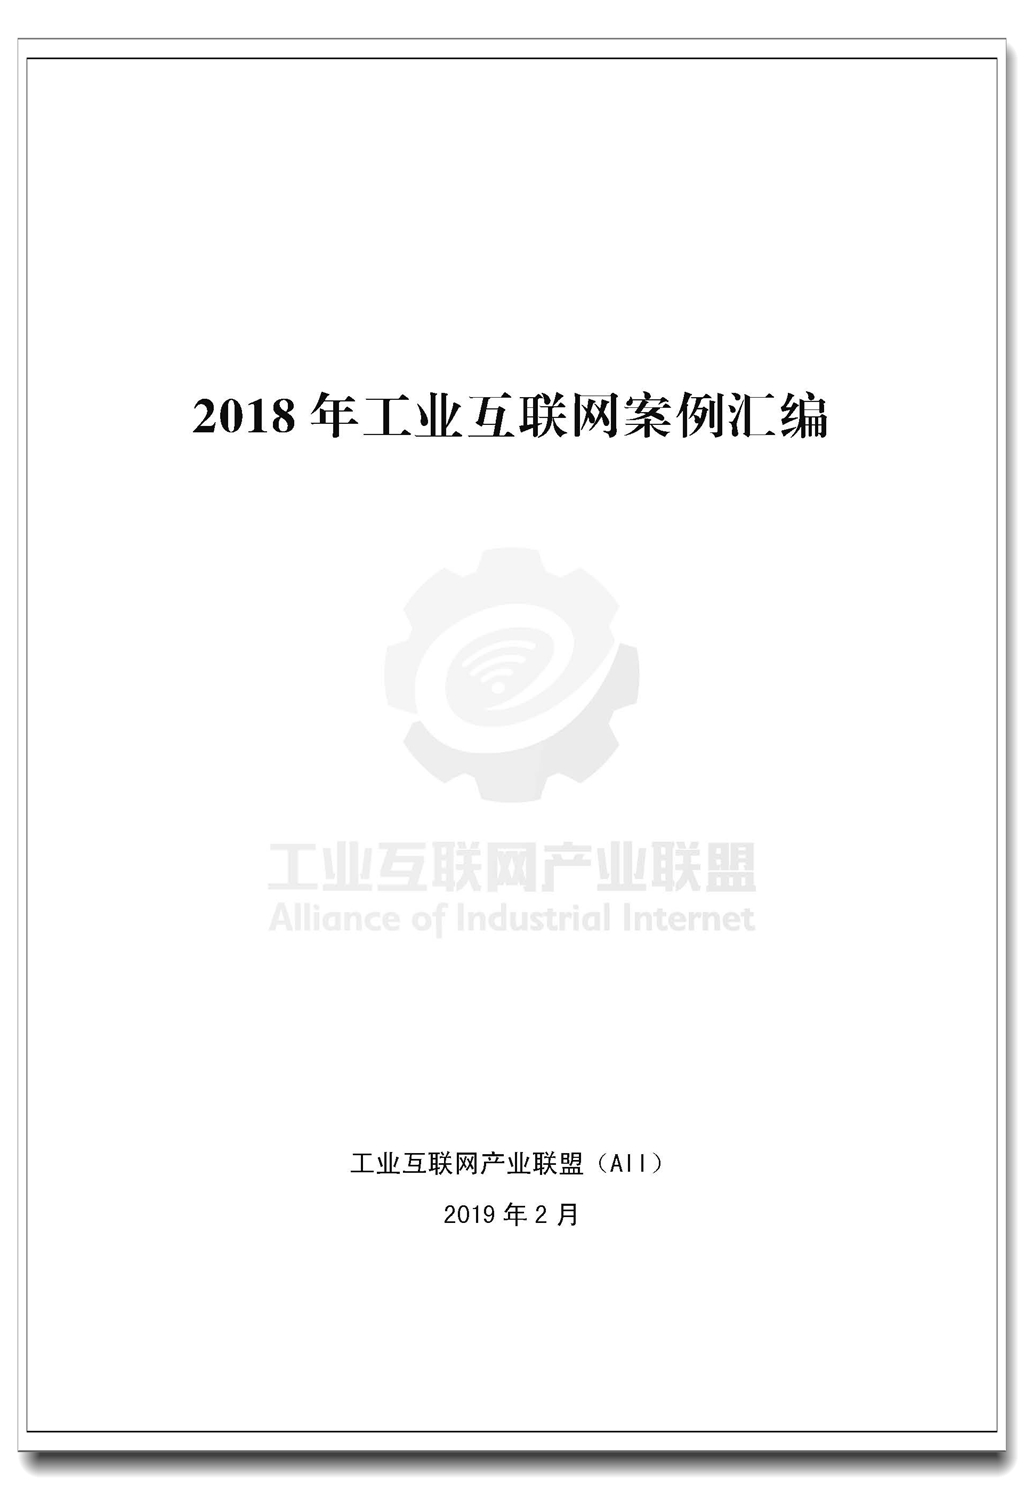 Pages from 2018年工业互联网案例汇编-测试床.jpg